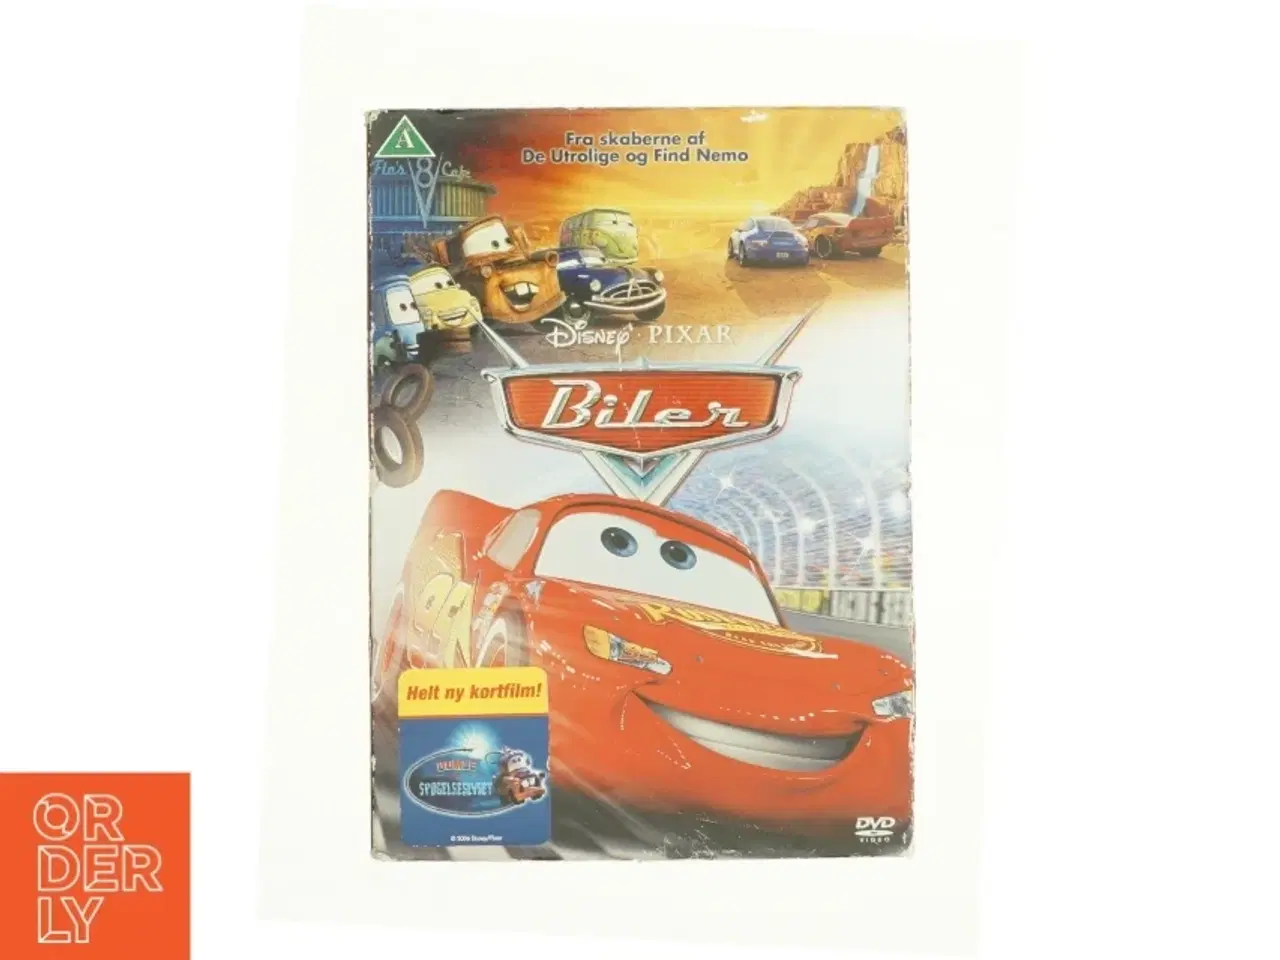 Billede 1 - Biler fra DVD